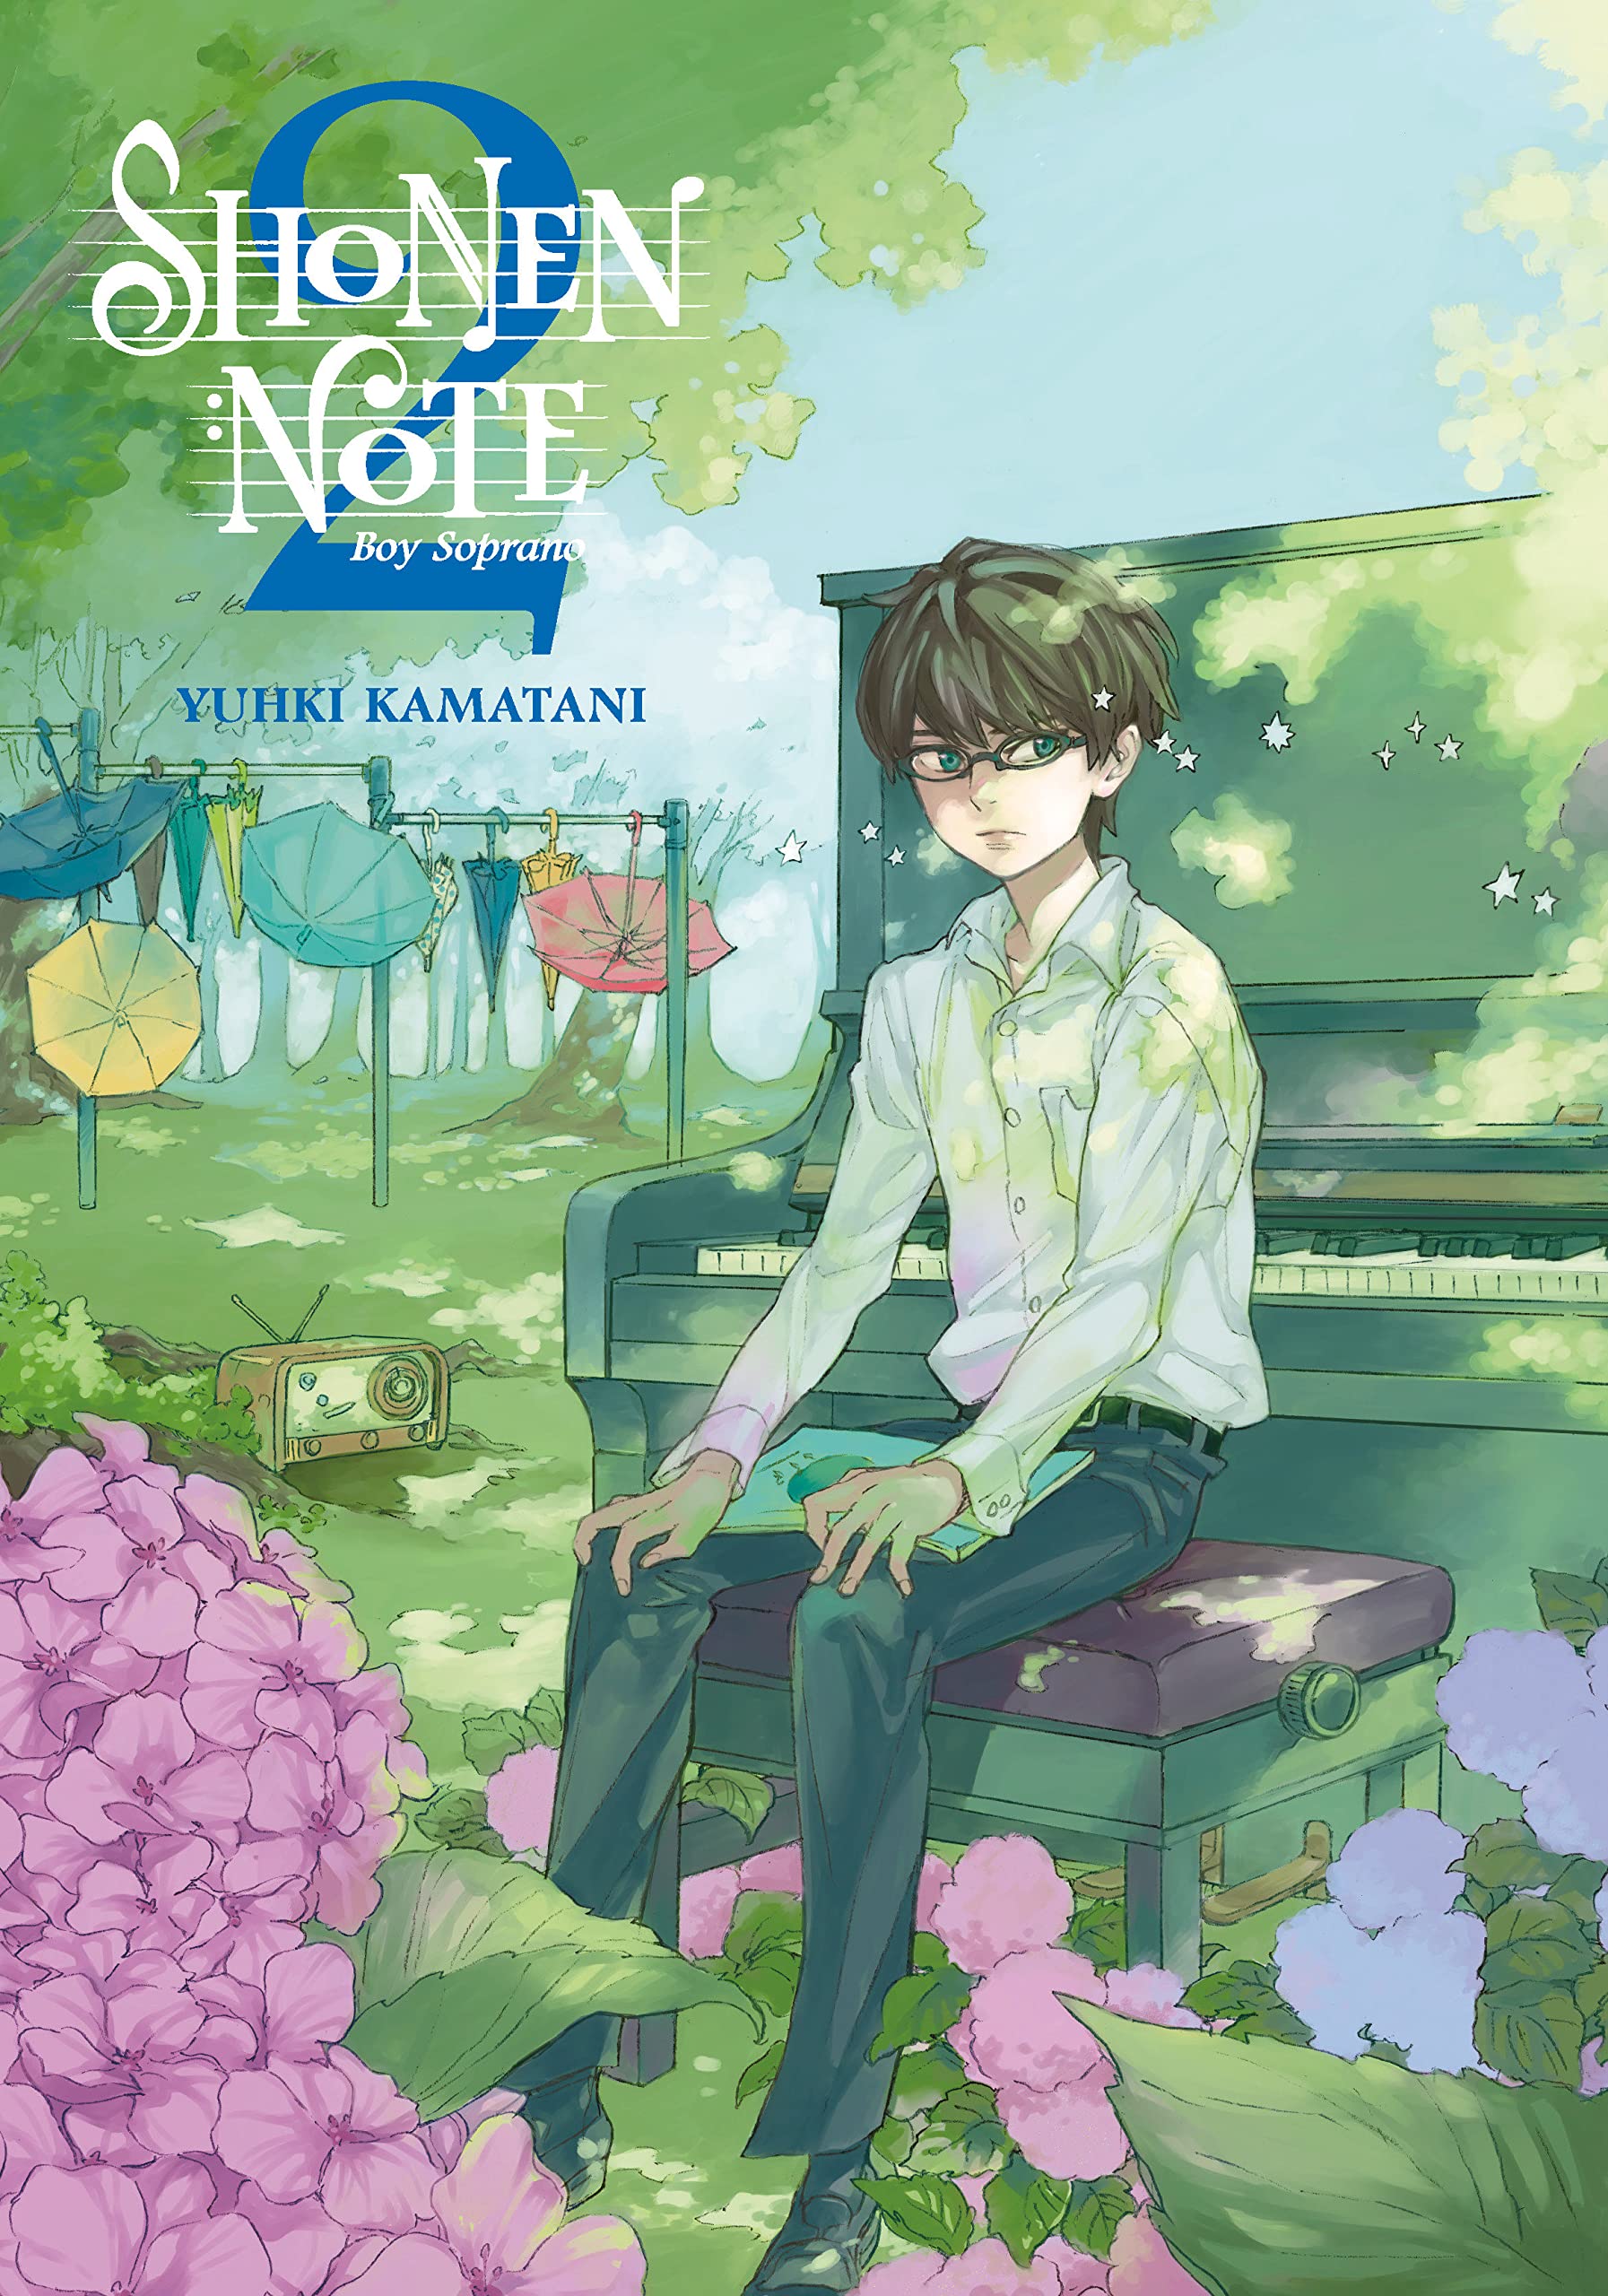 Shonen Note: Boy Soprano - Volume 2 | Yuhki Kamatani